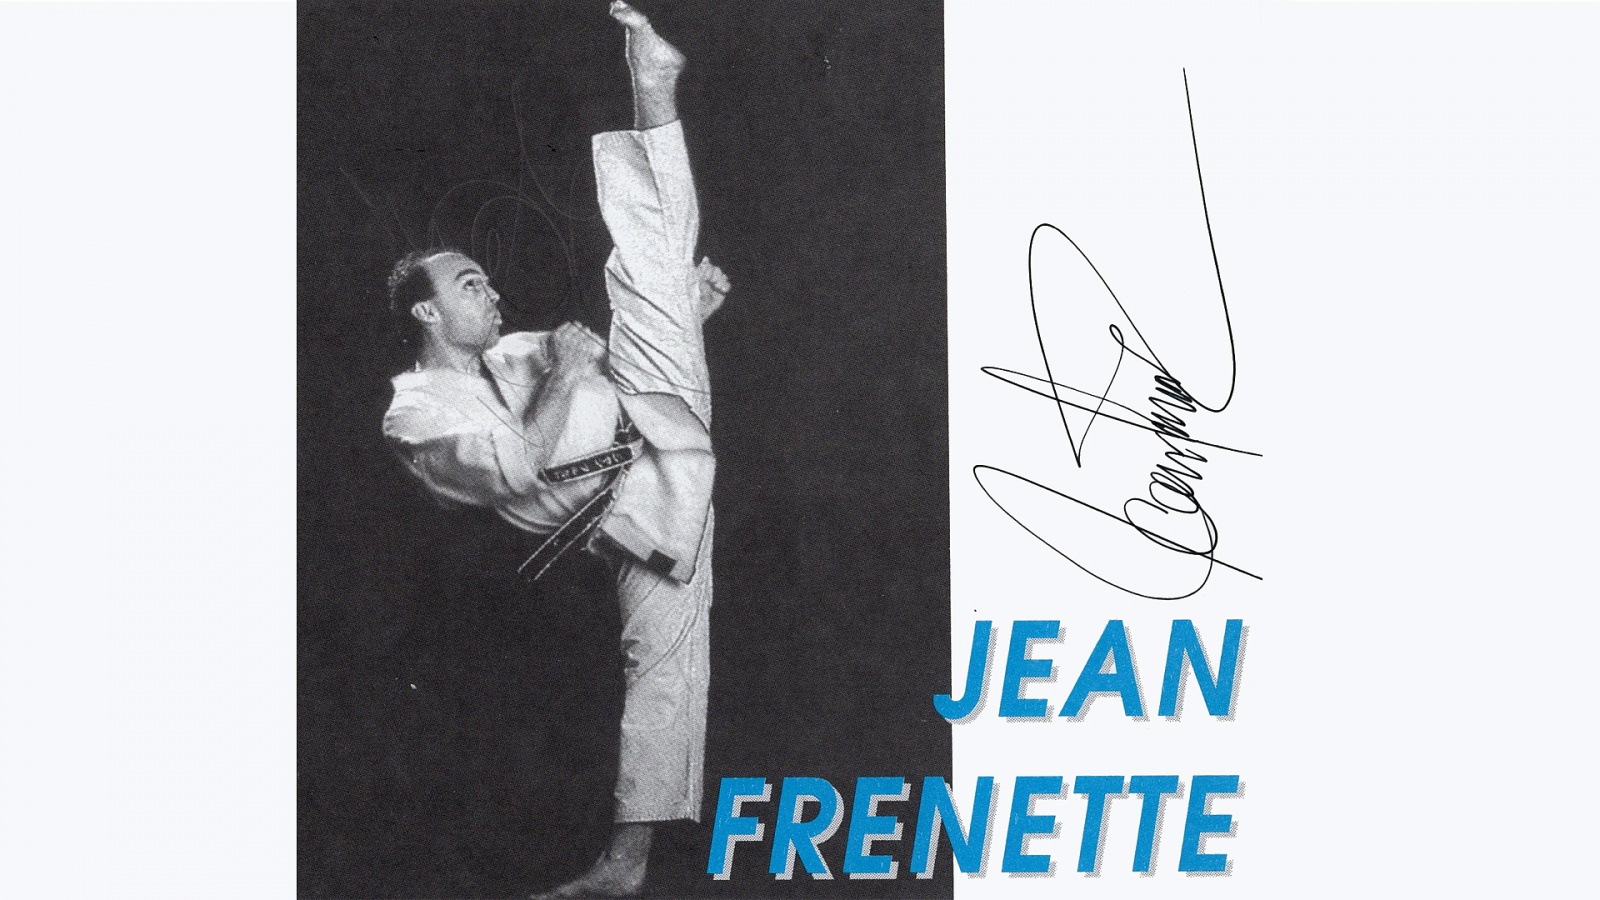 Jean Frenette